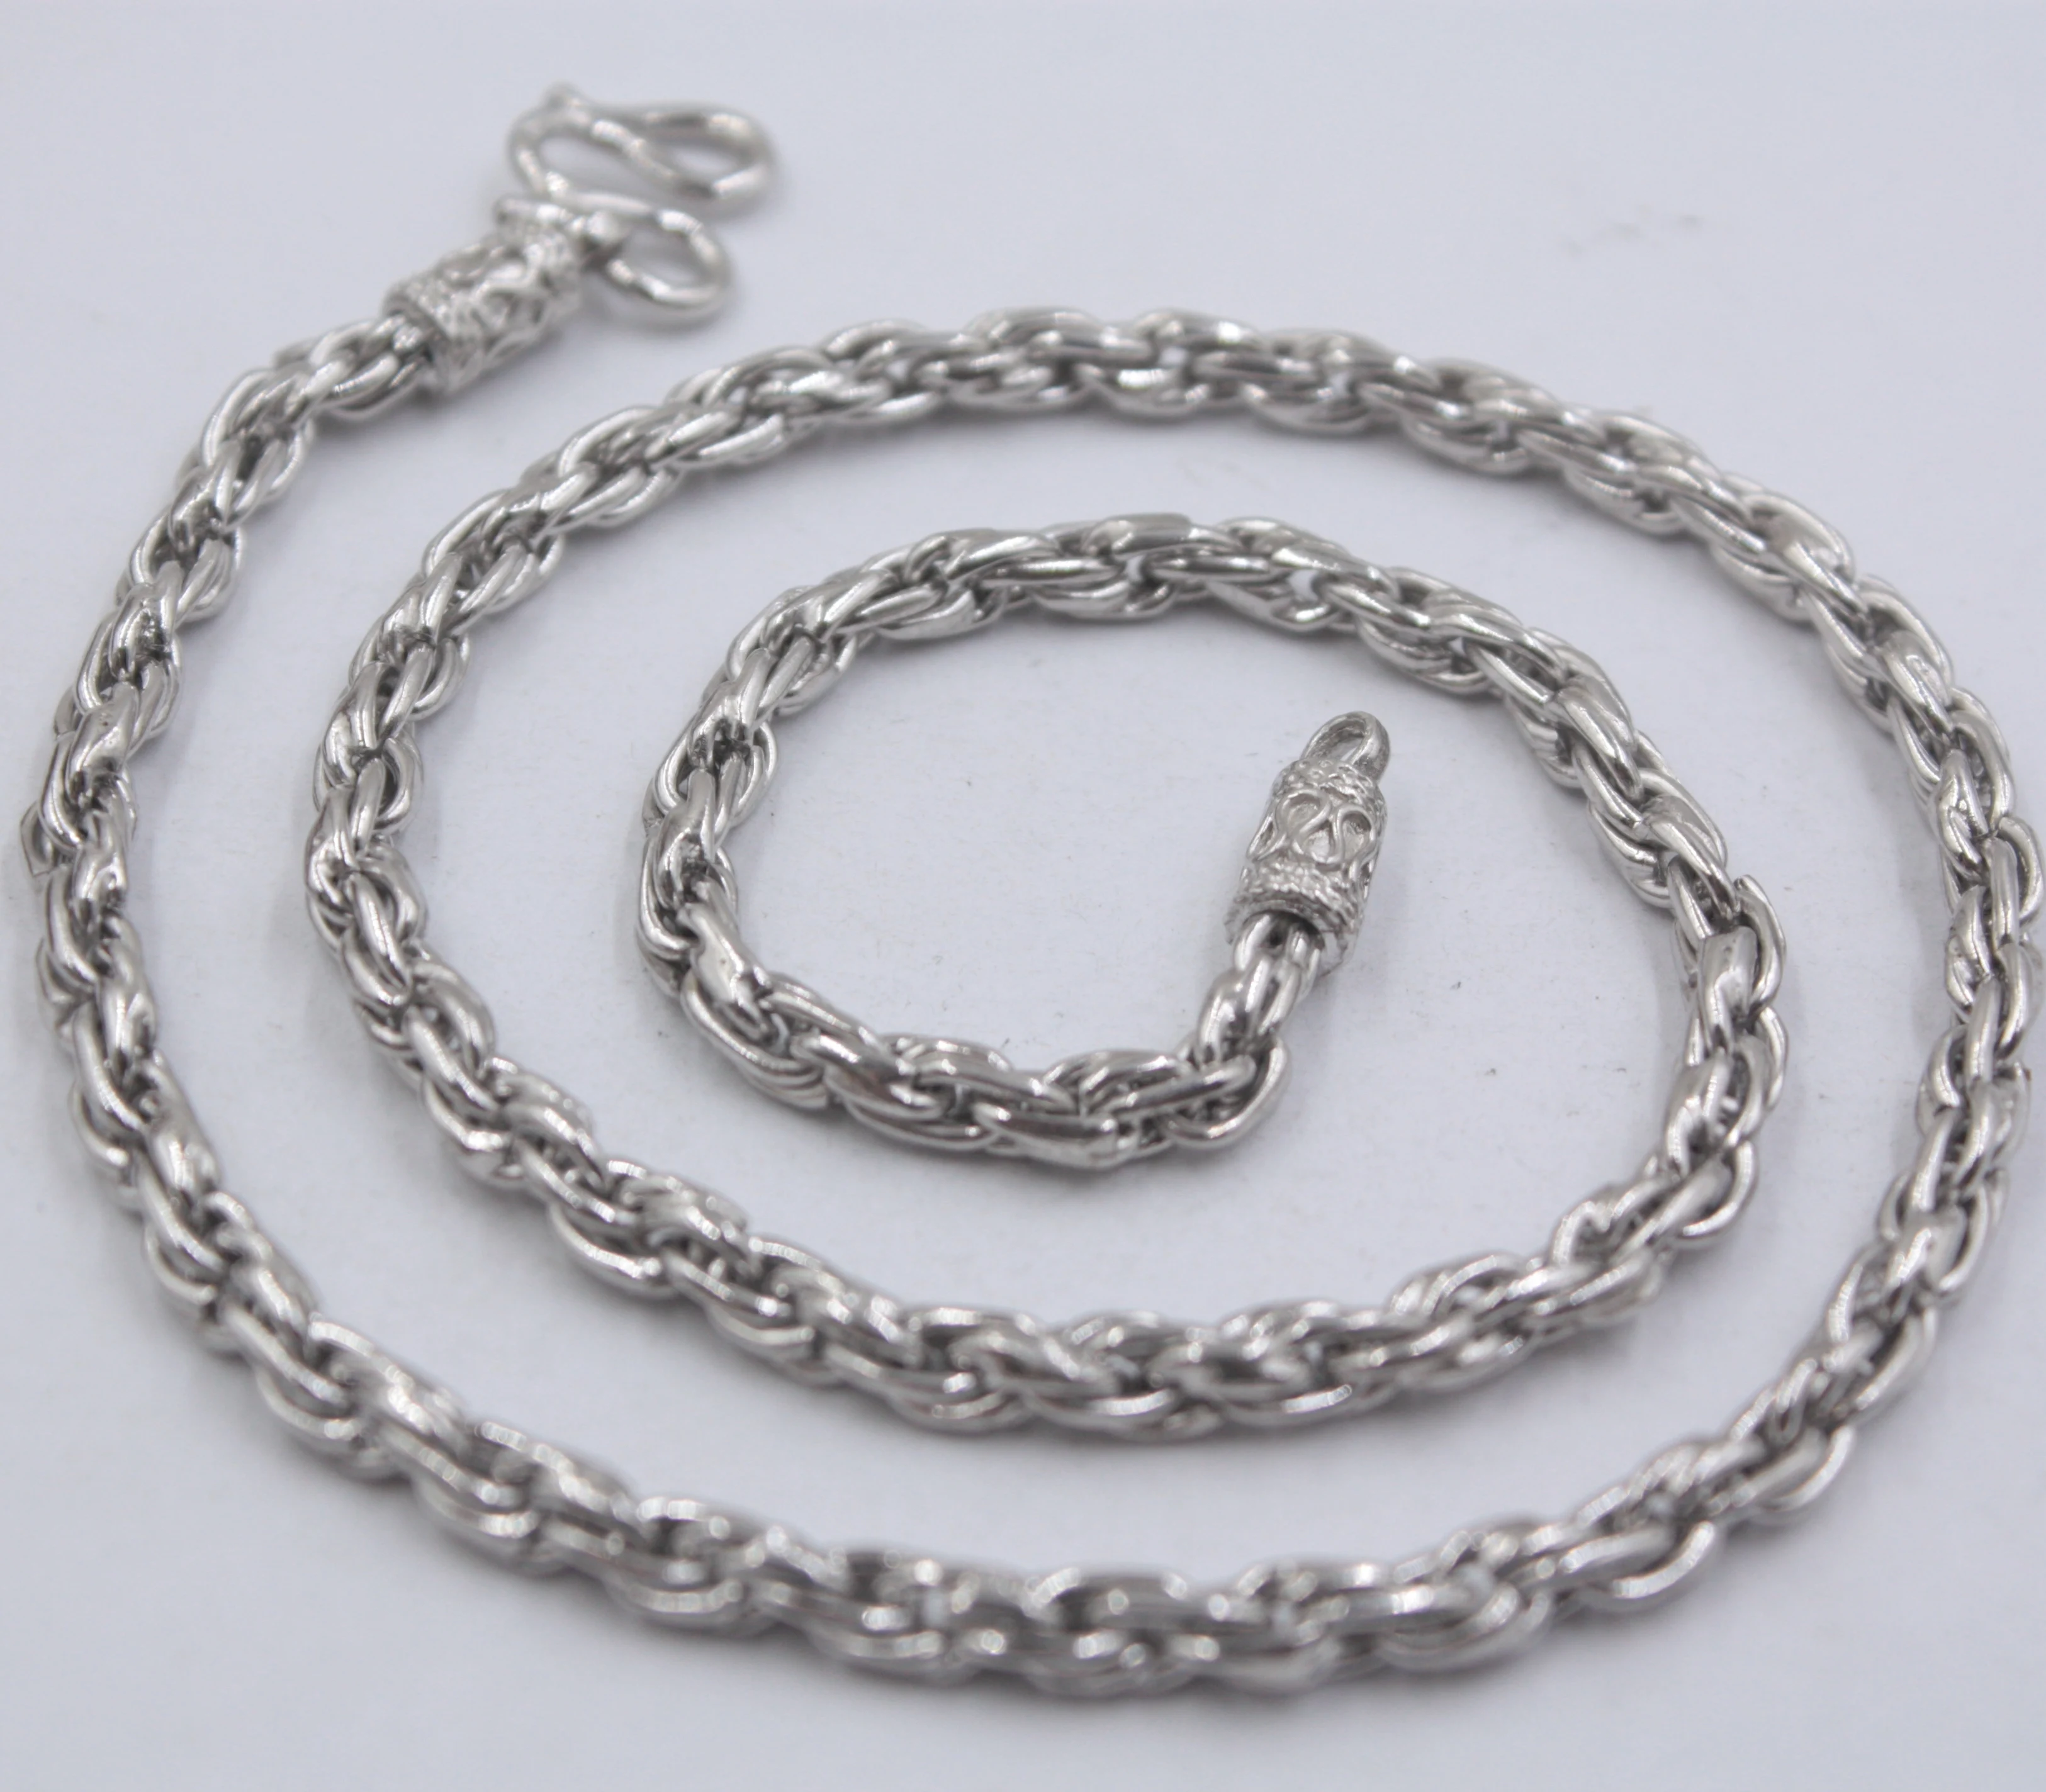 KnSam Belcher Chain for Men Women S925 Silver Classic Necklace W3-4mm x L18-32 Inches 